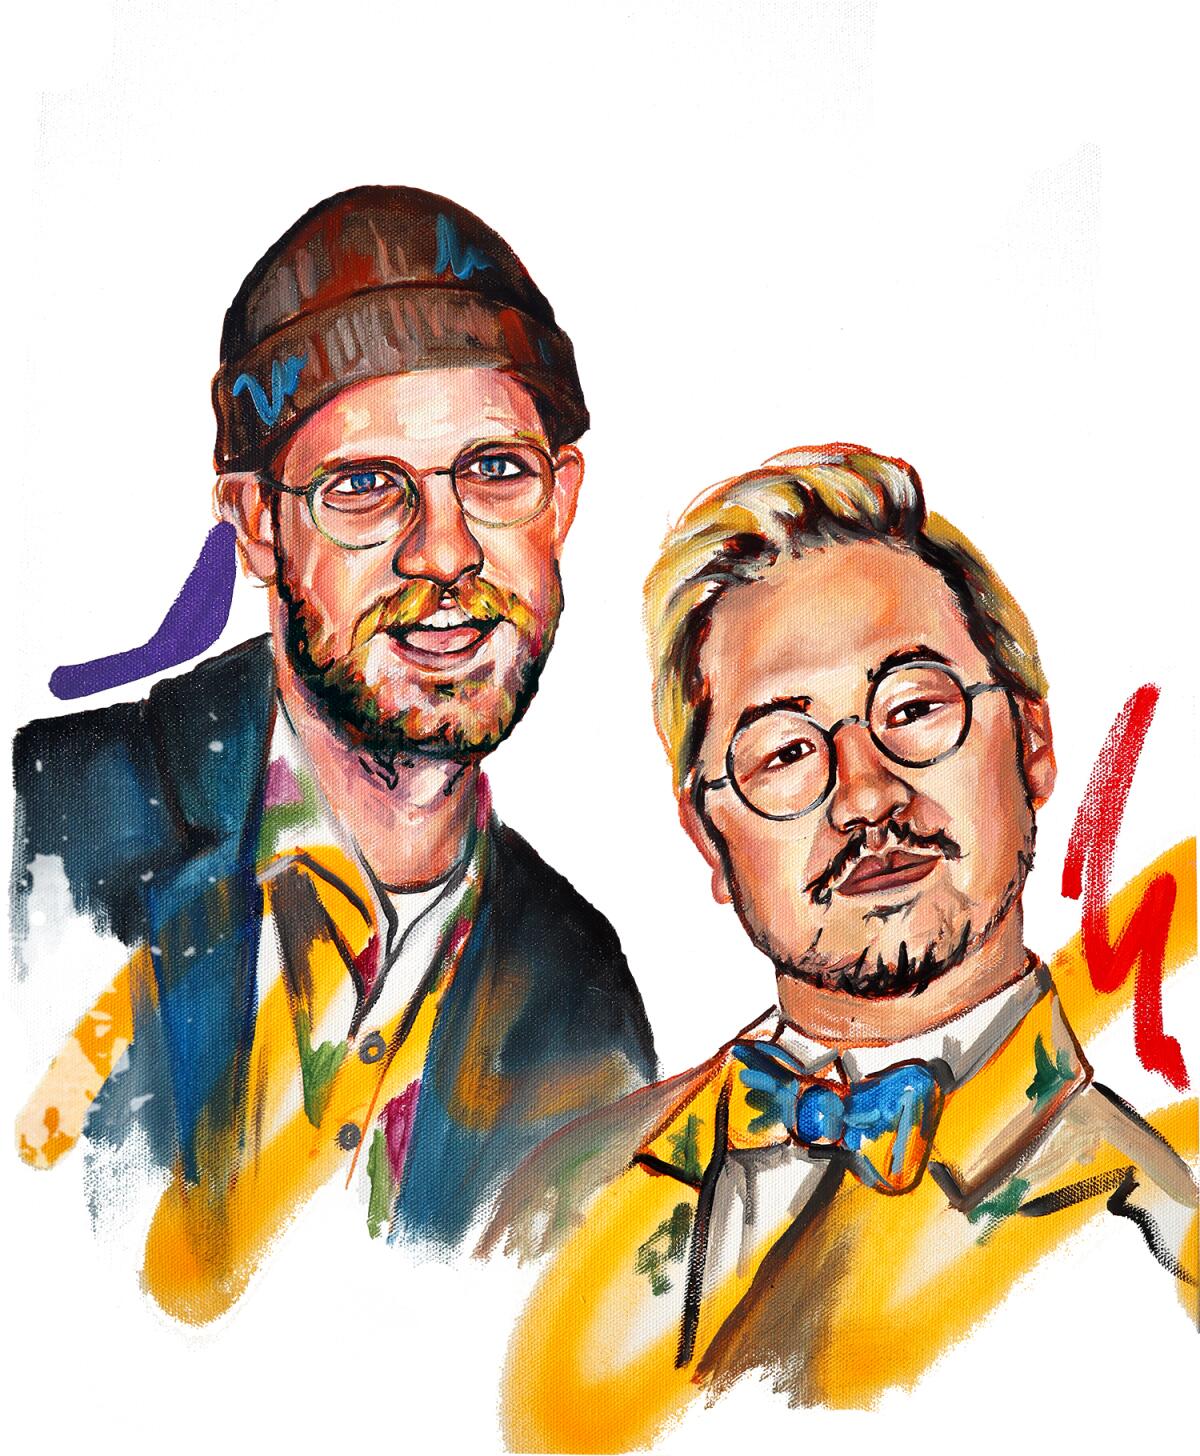 An illustration of directors Daniel Scheinert and Daniel Kwan